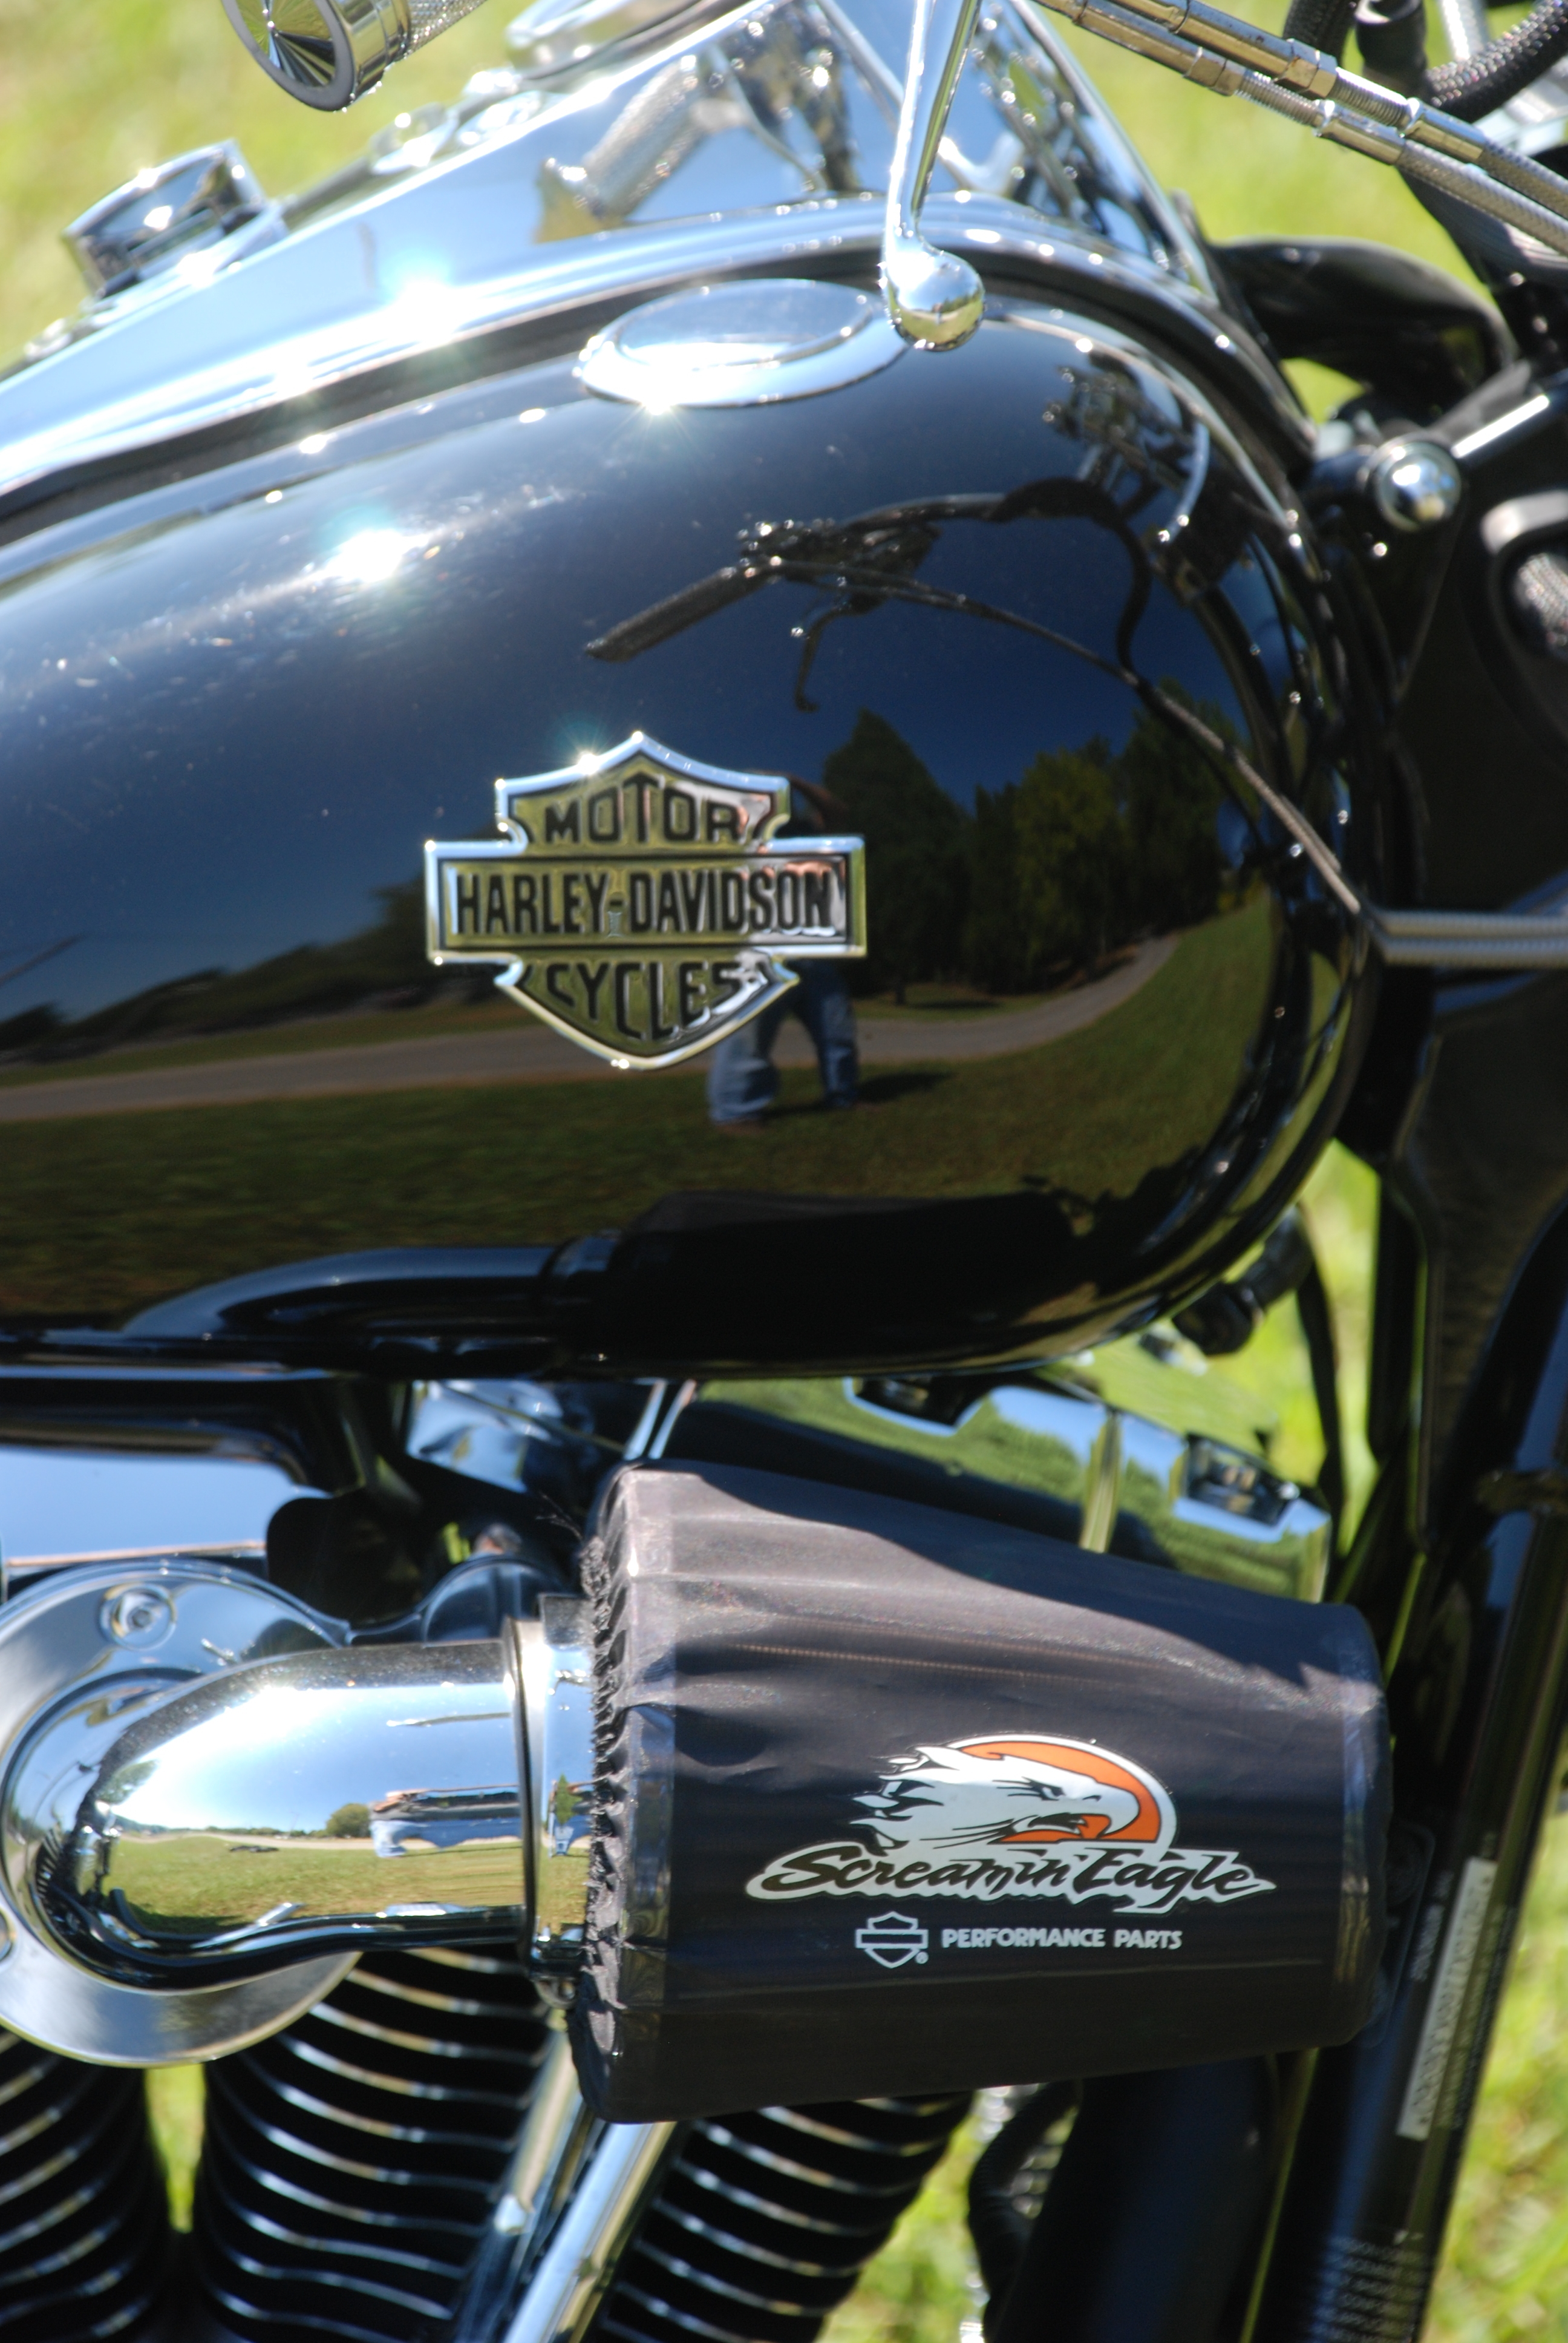 Will a softail tank emblem fit on a dyna tank? - Harley Davidson Forums